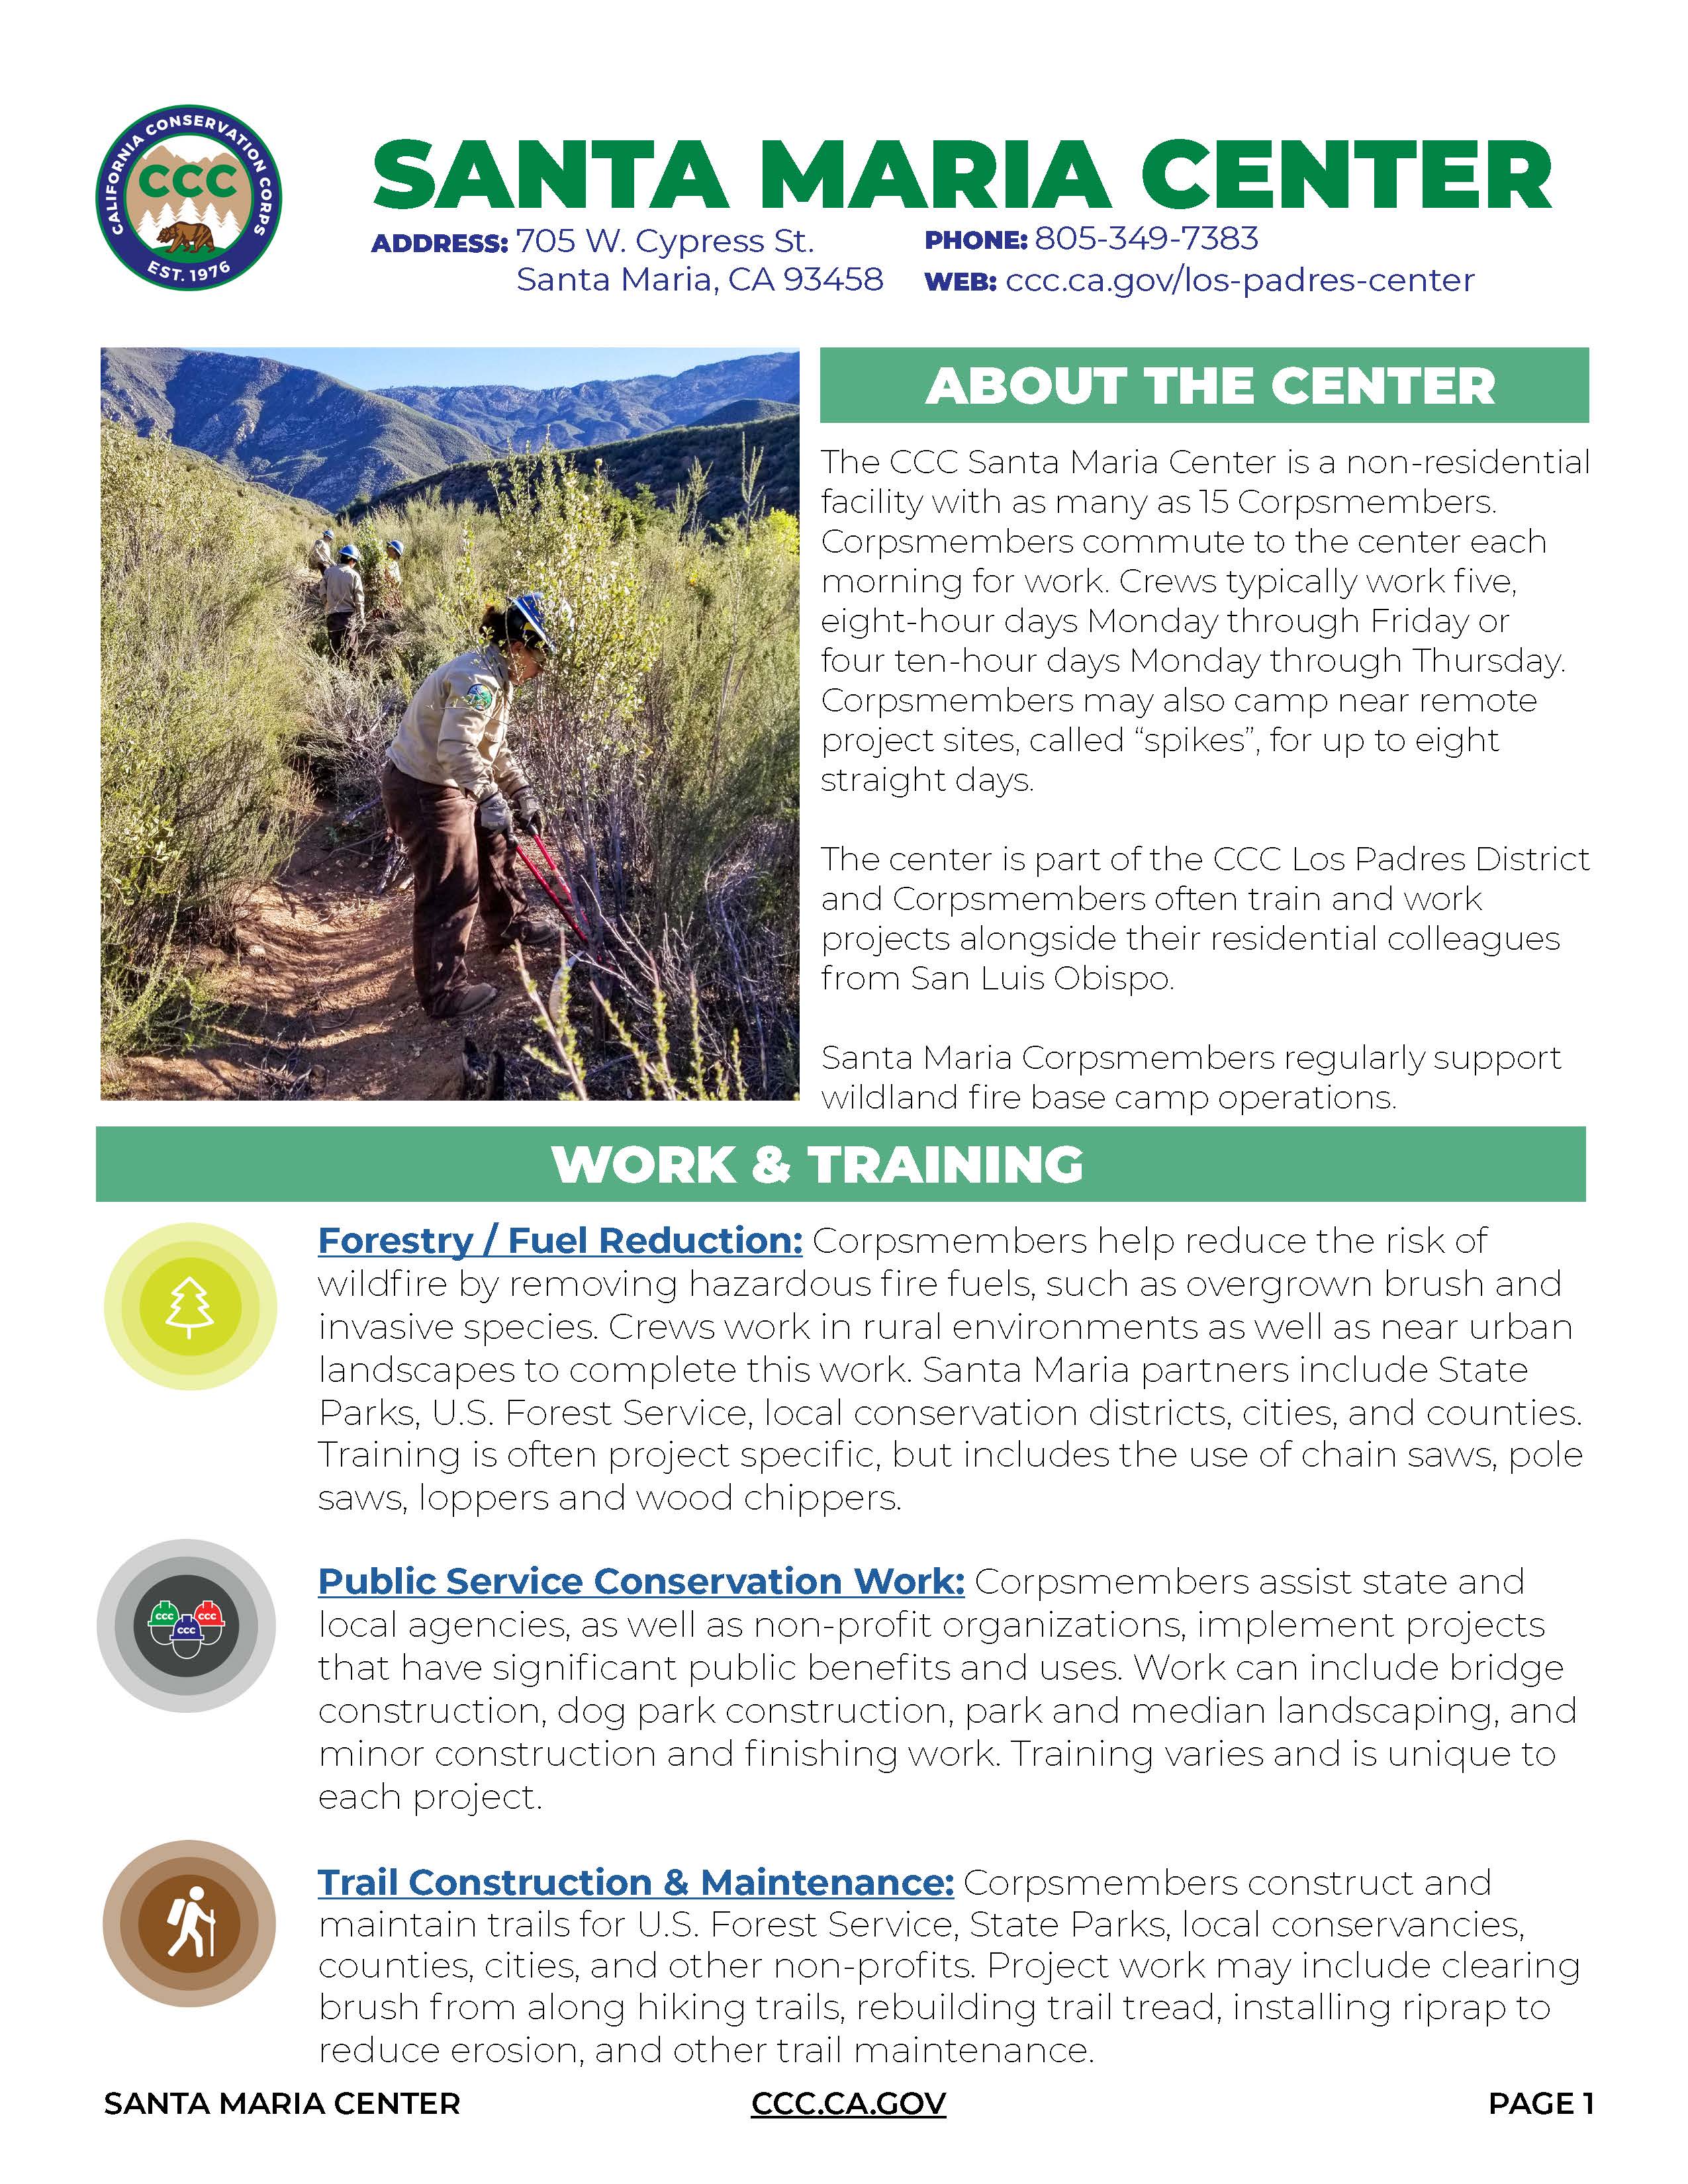 Image of Santa Maria Center Fact Sheet